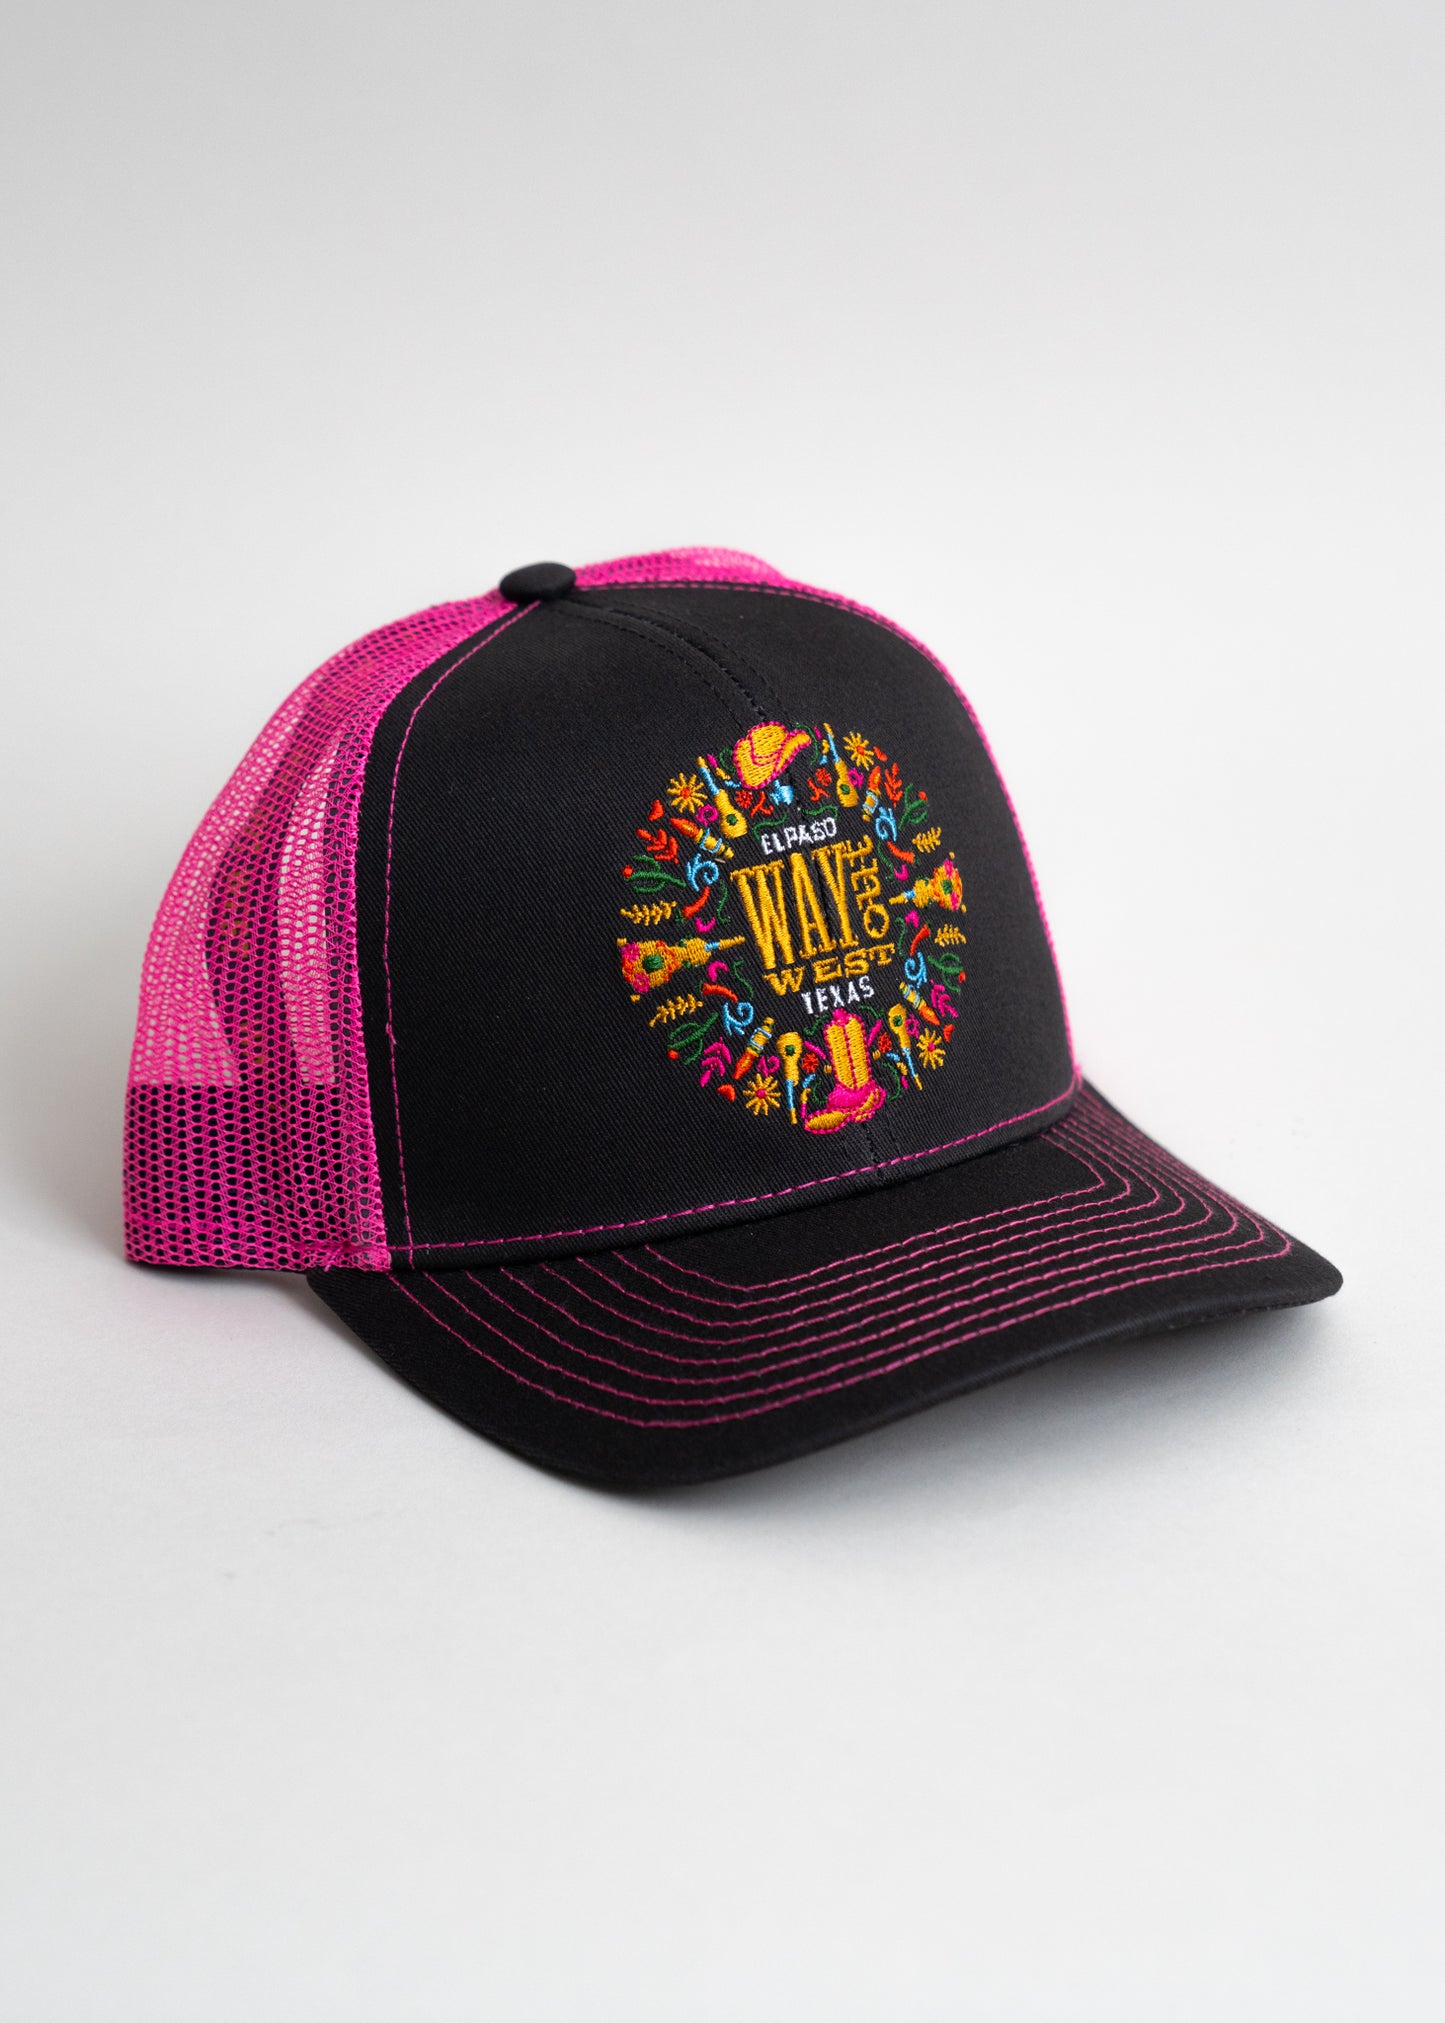 Embroidered WOW Neon Pink Trucker Hat